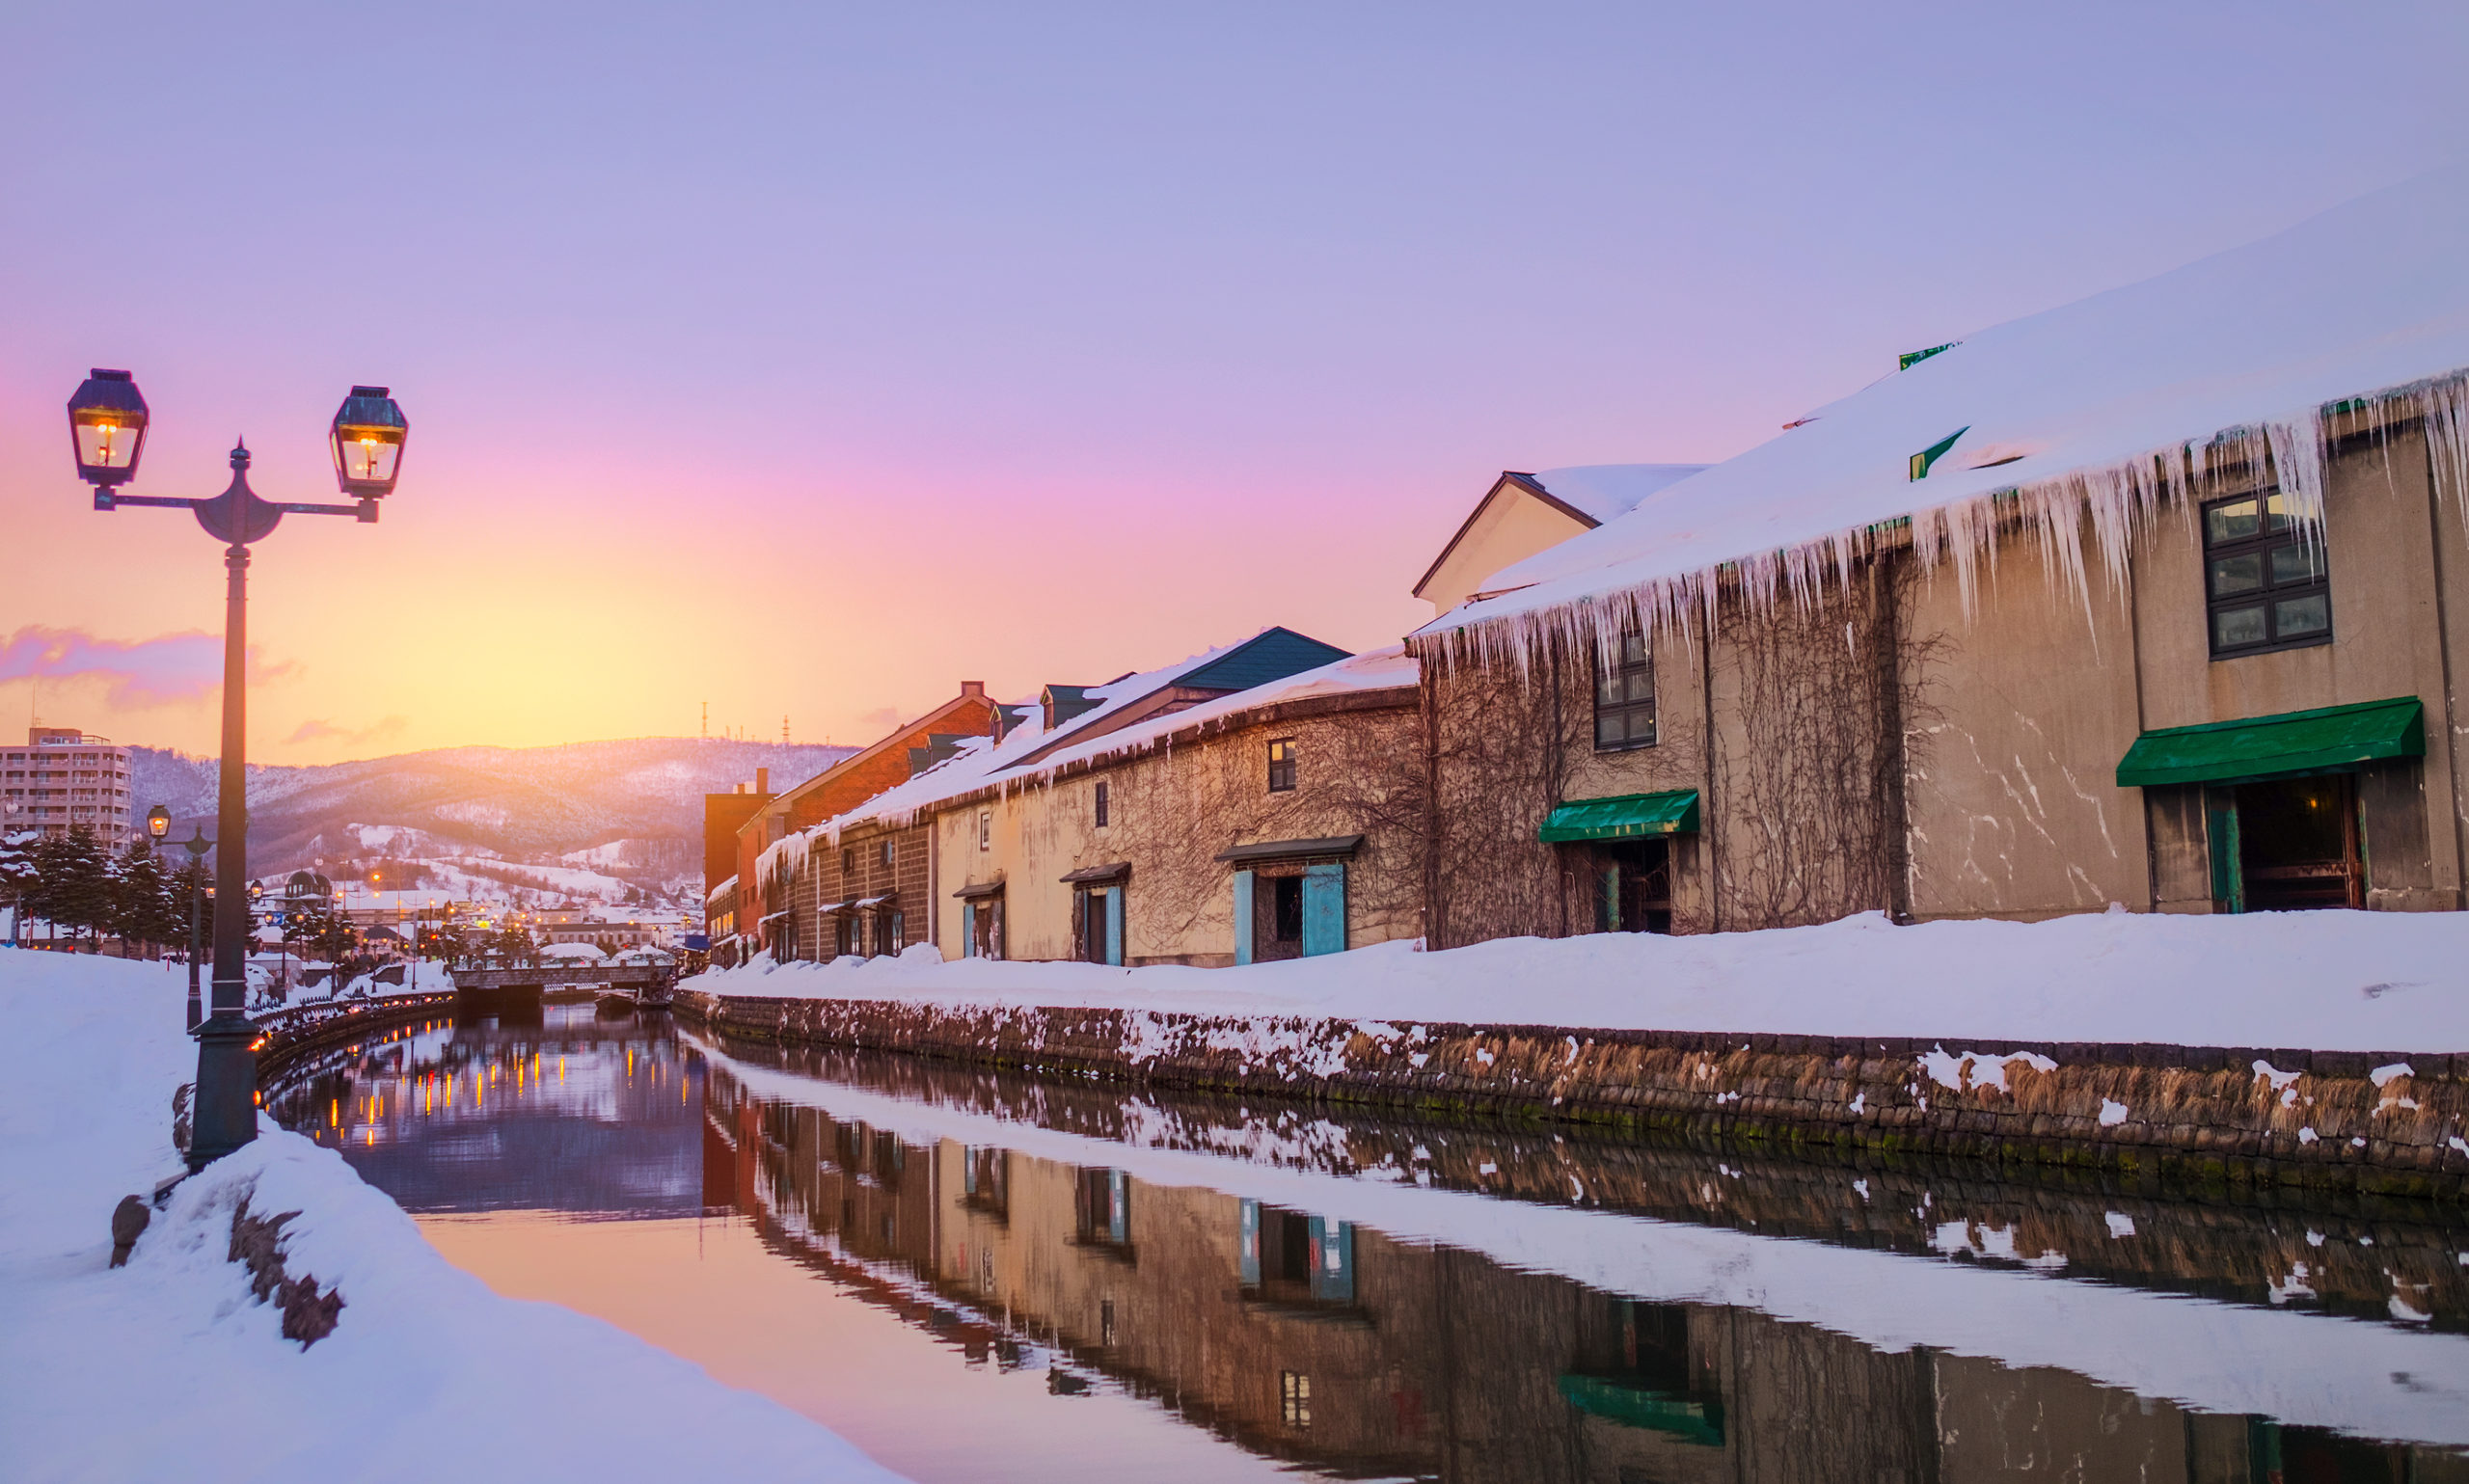 View of Otaru Canel in Winter season with sunset, Hokkaido - Japan.